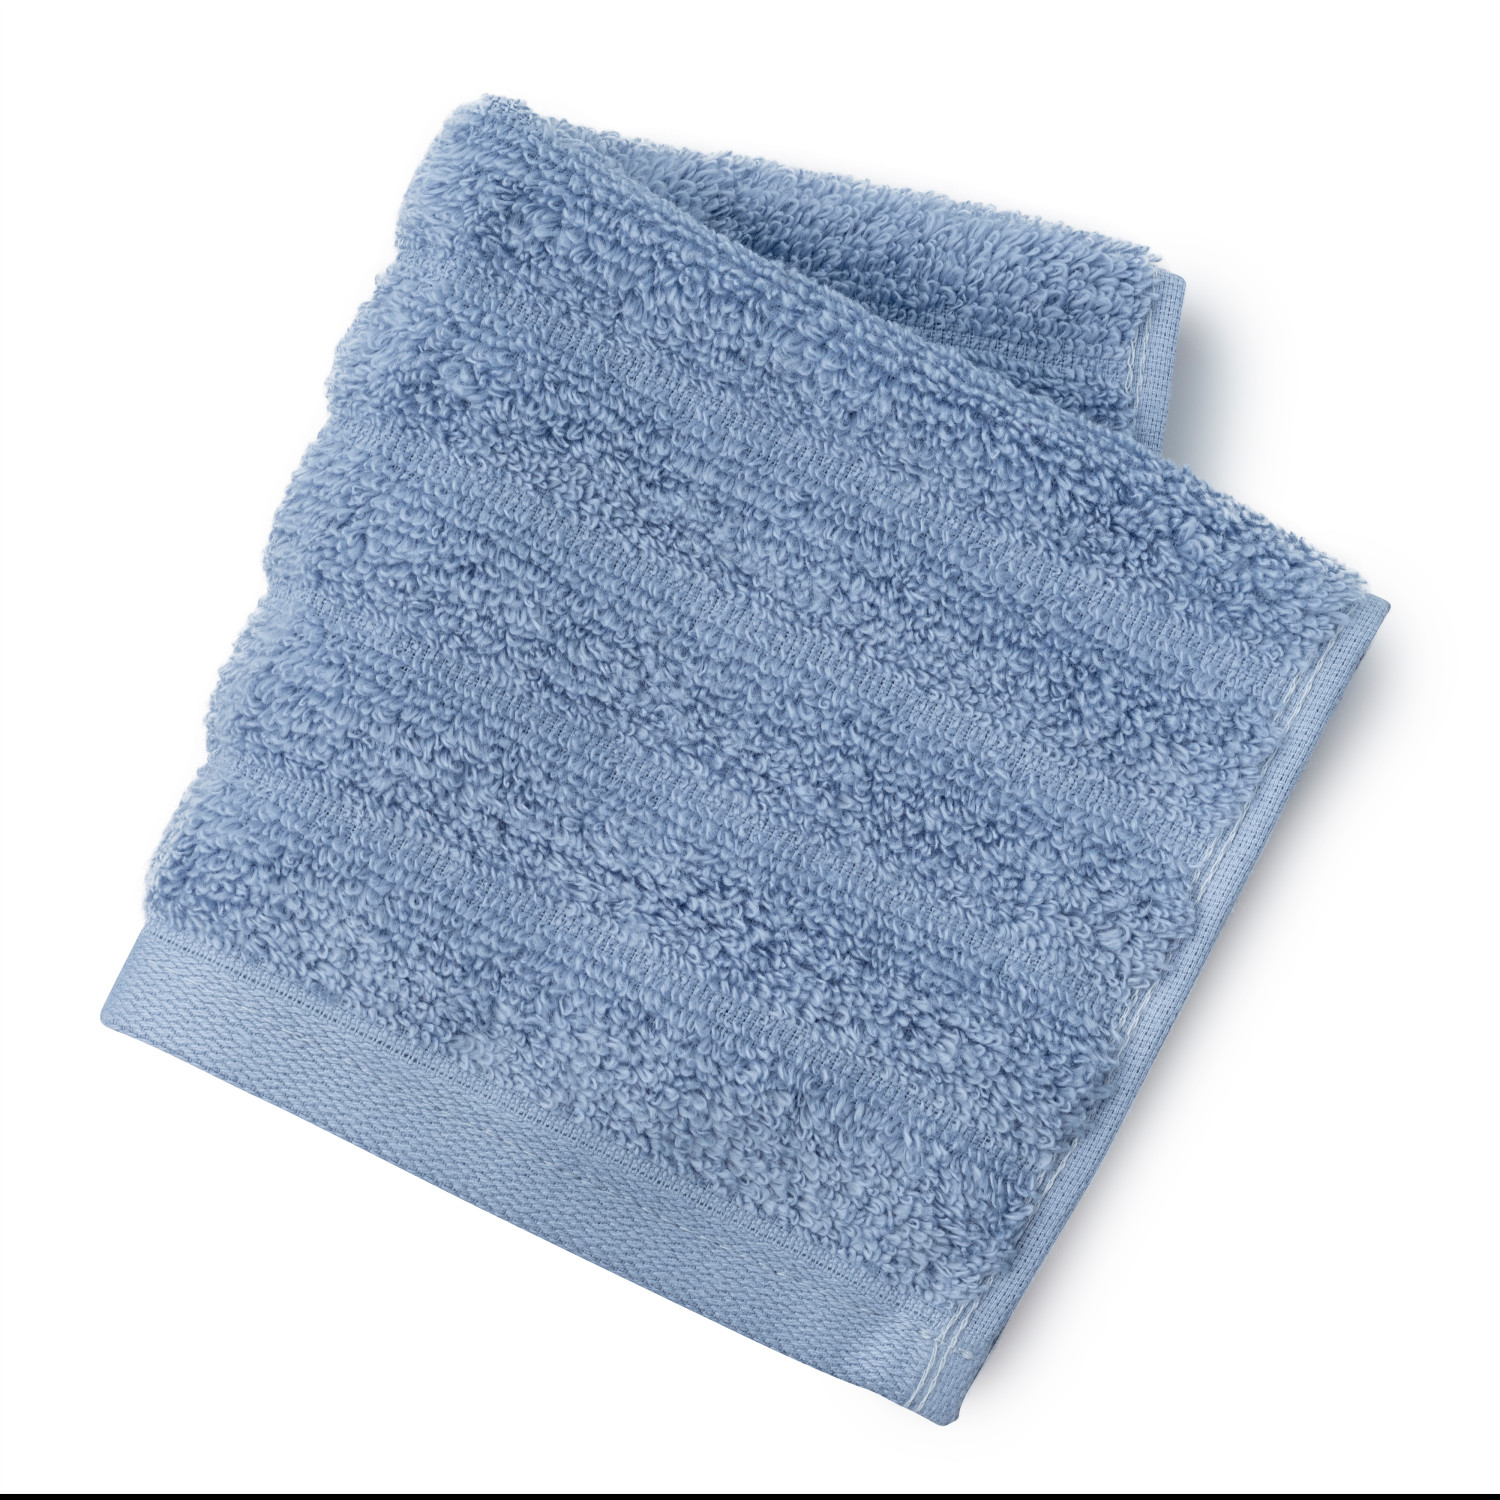 Mainstays Performance 6-Piece Towel Set, Textured Blue Linen - image 5 of 6